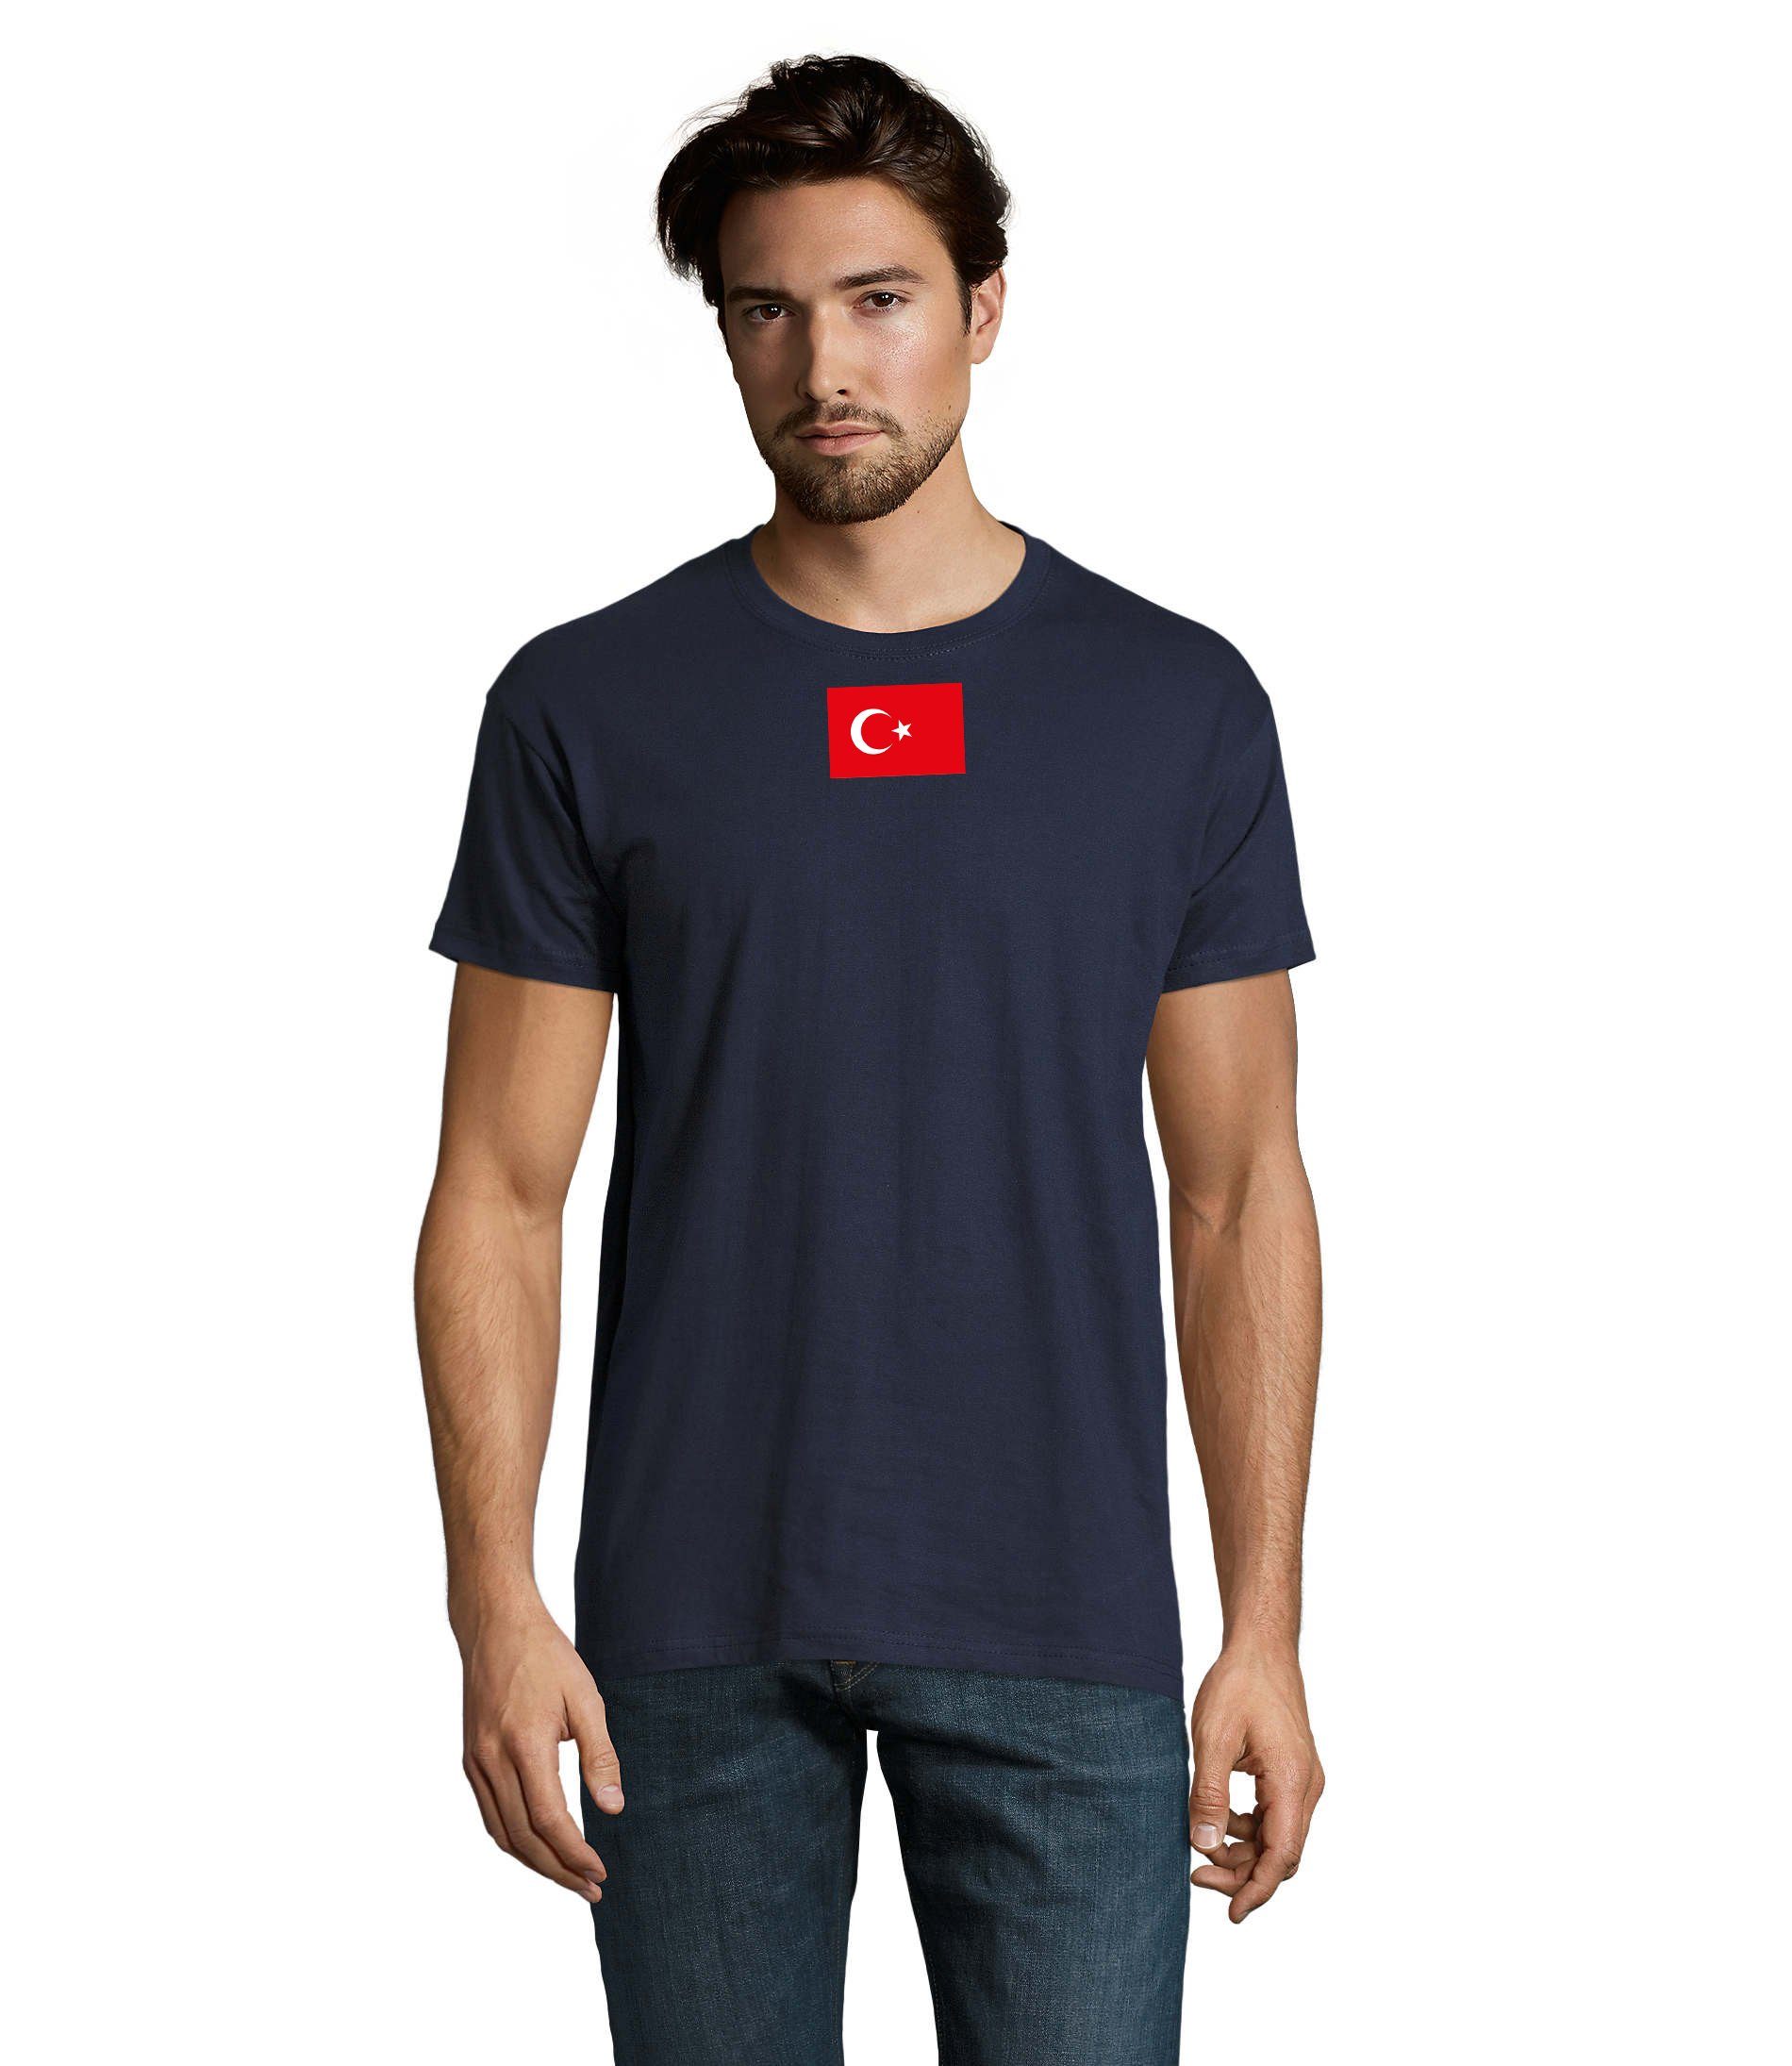 Blondie & Brownie T-Shirt Herren Türkei Turkey Ukraine USA Army Armee Nato Peace Air Force Navyblau